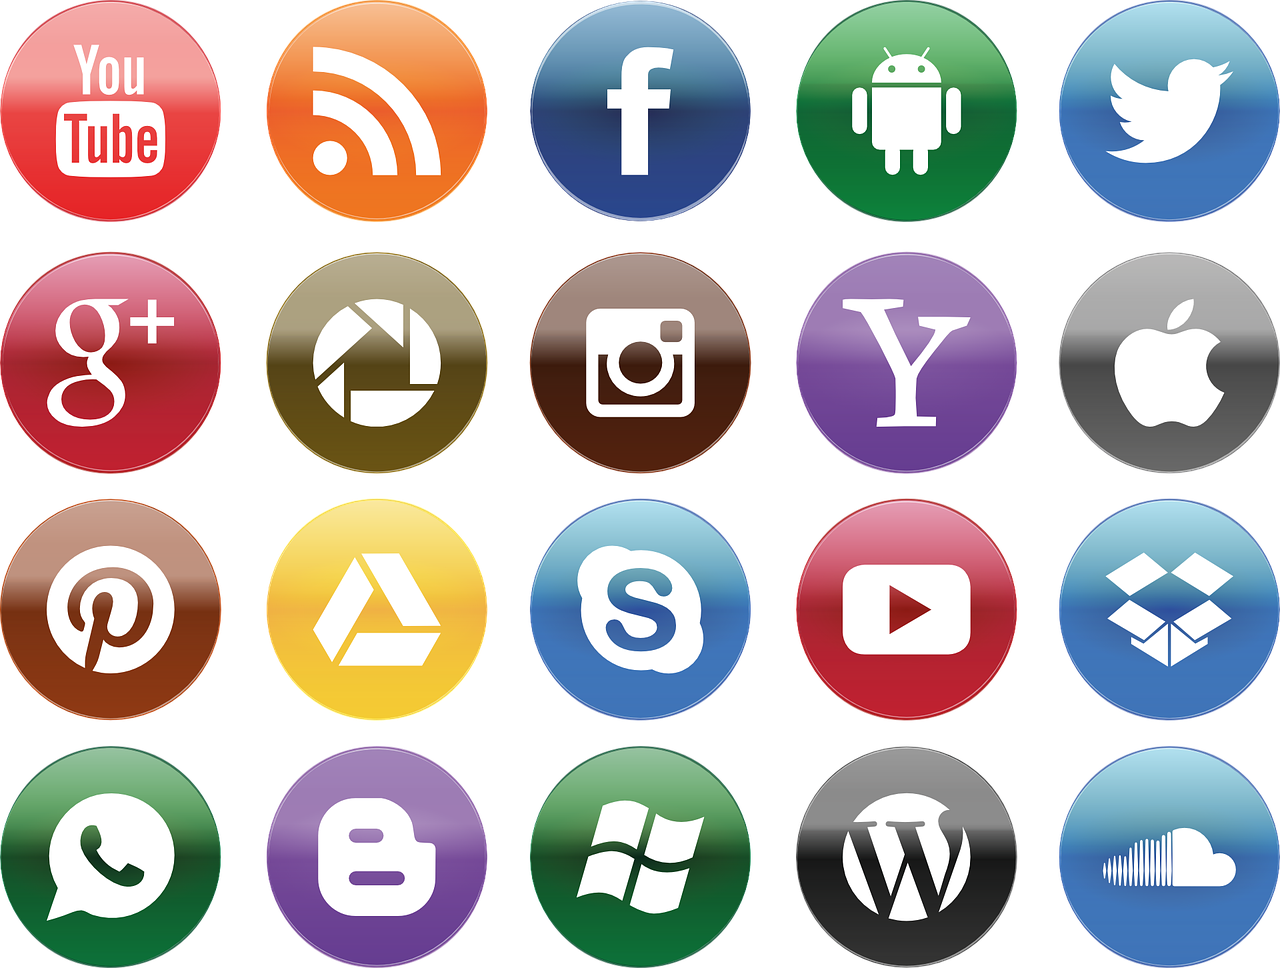 Google drive - Free social media icons